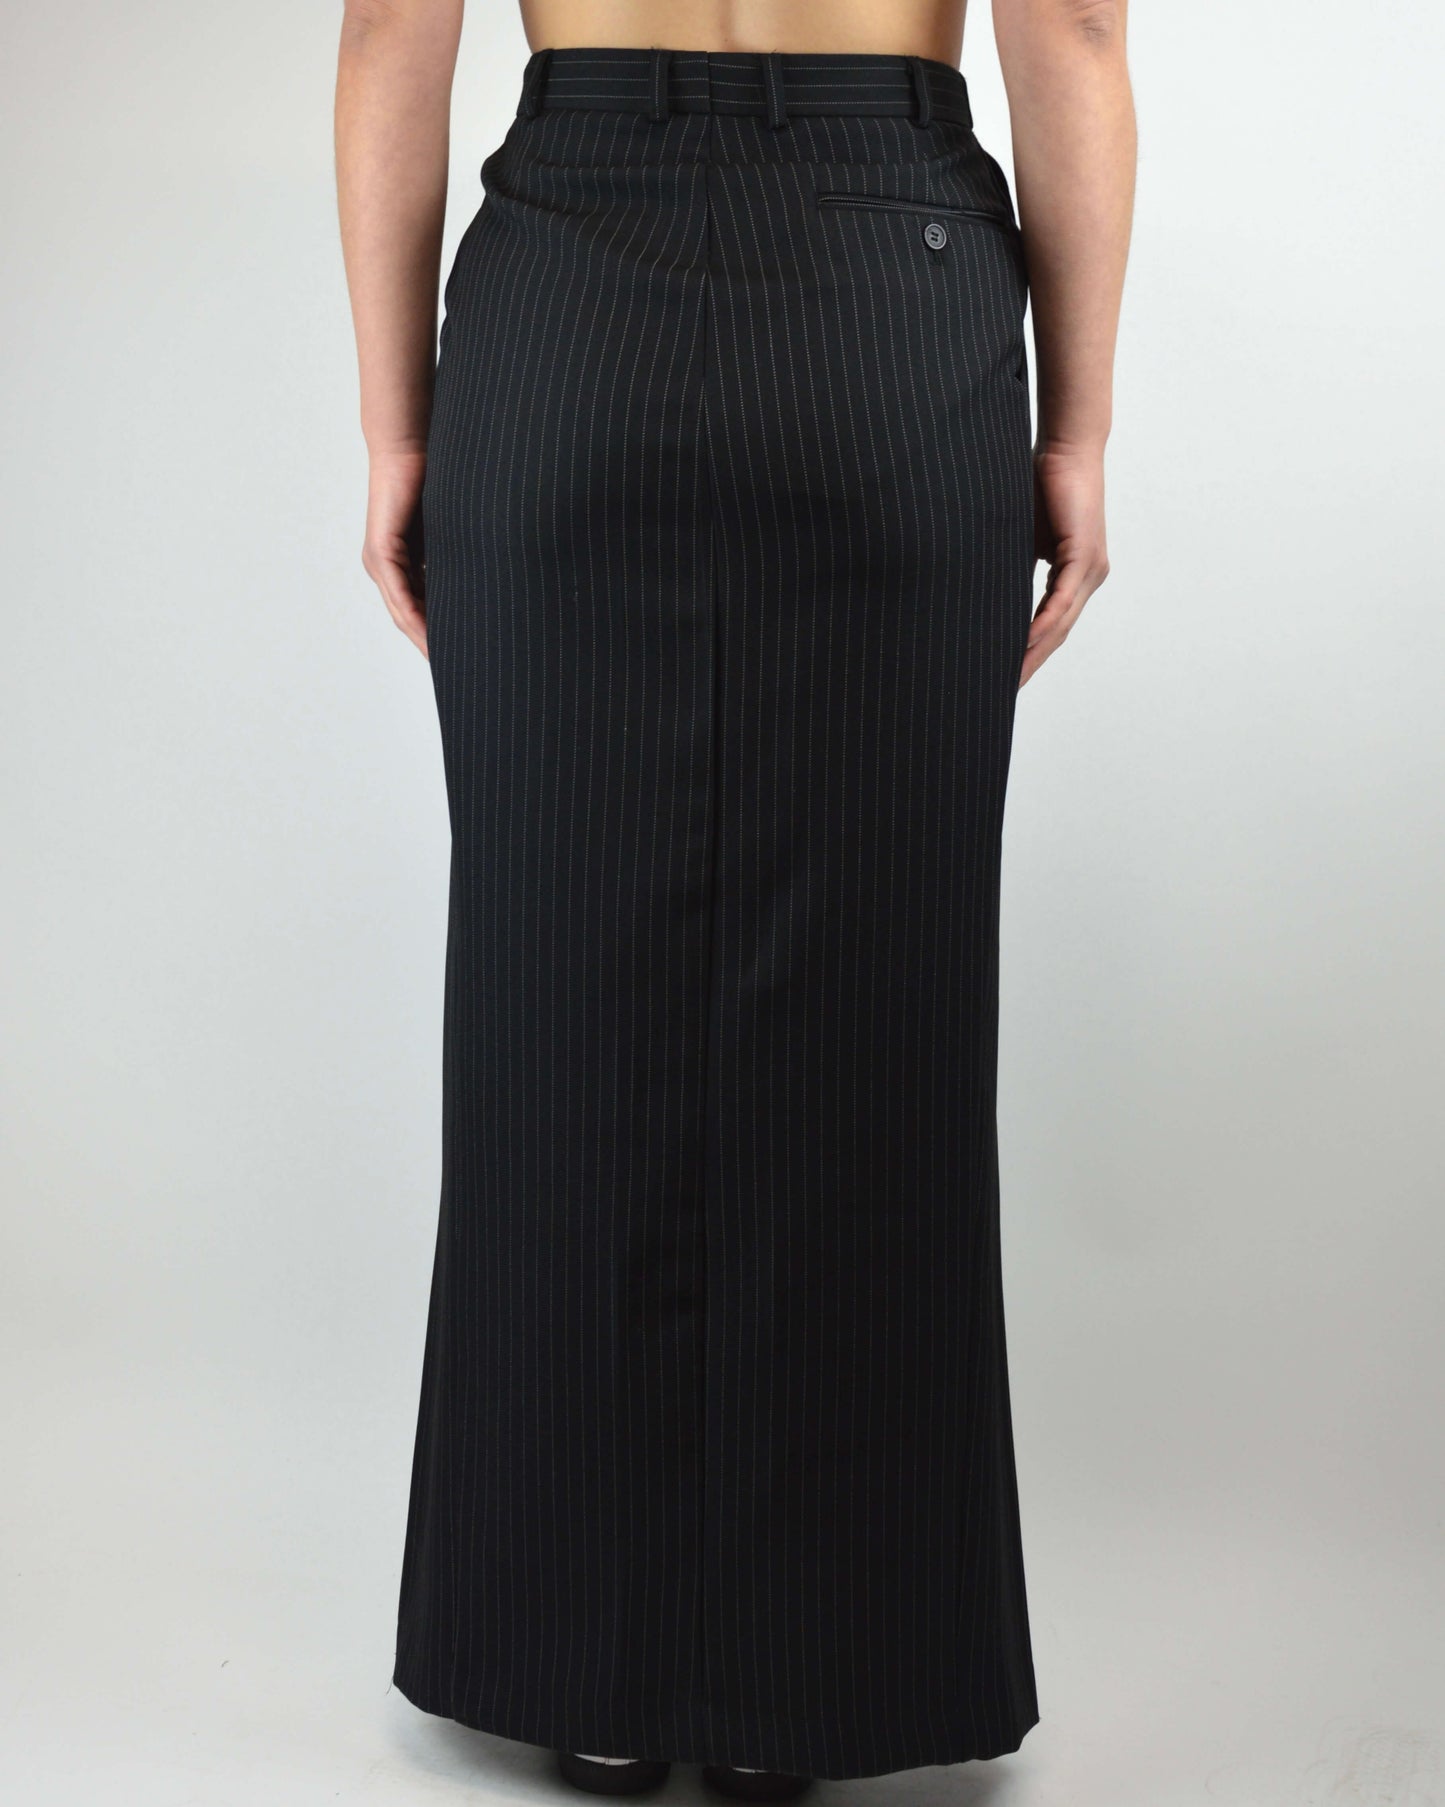 Three Pieces Skirt Suit - Vegan Black 90s (XS/S)